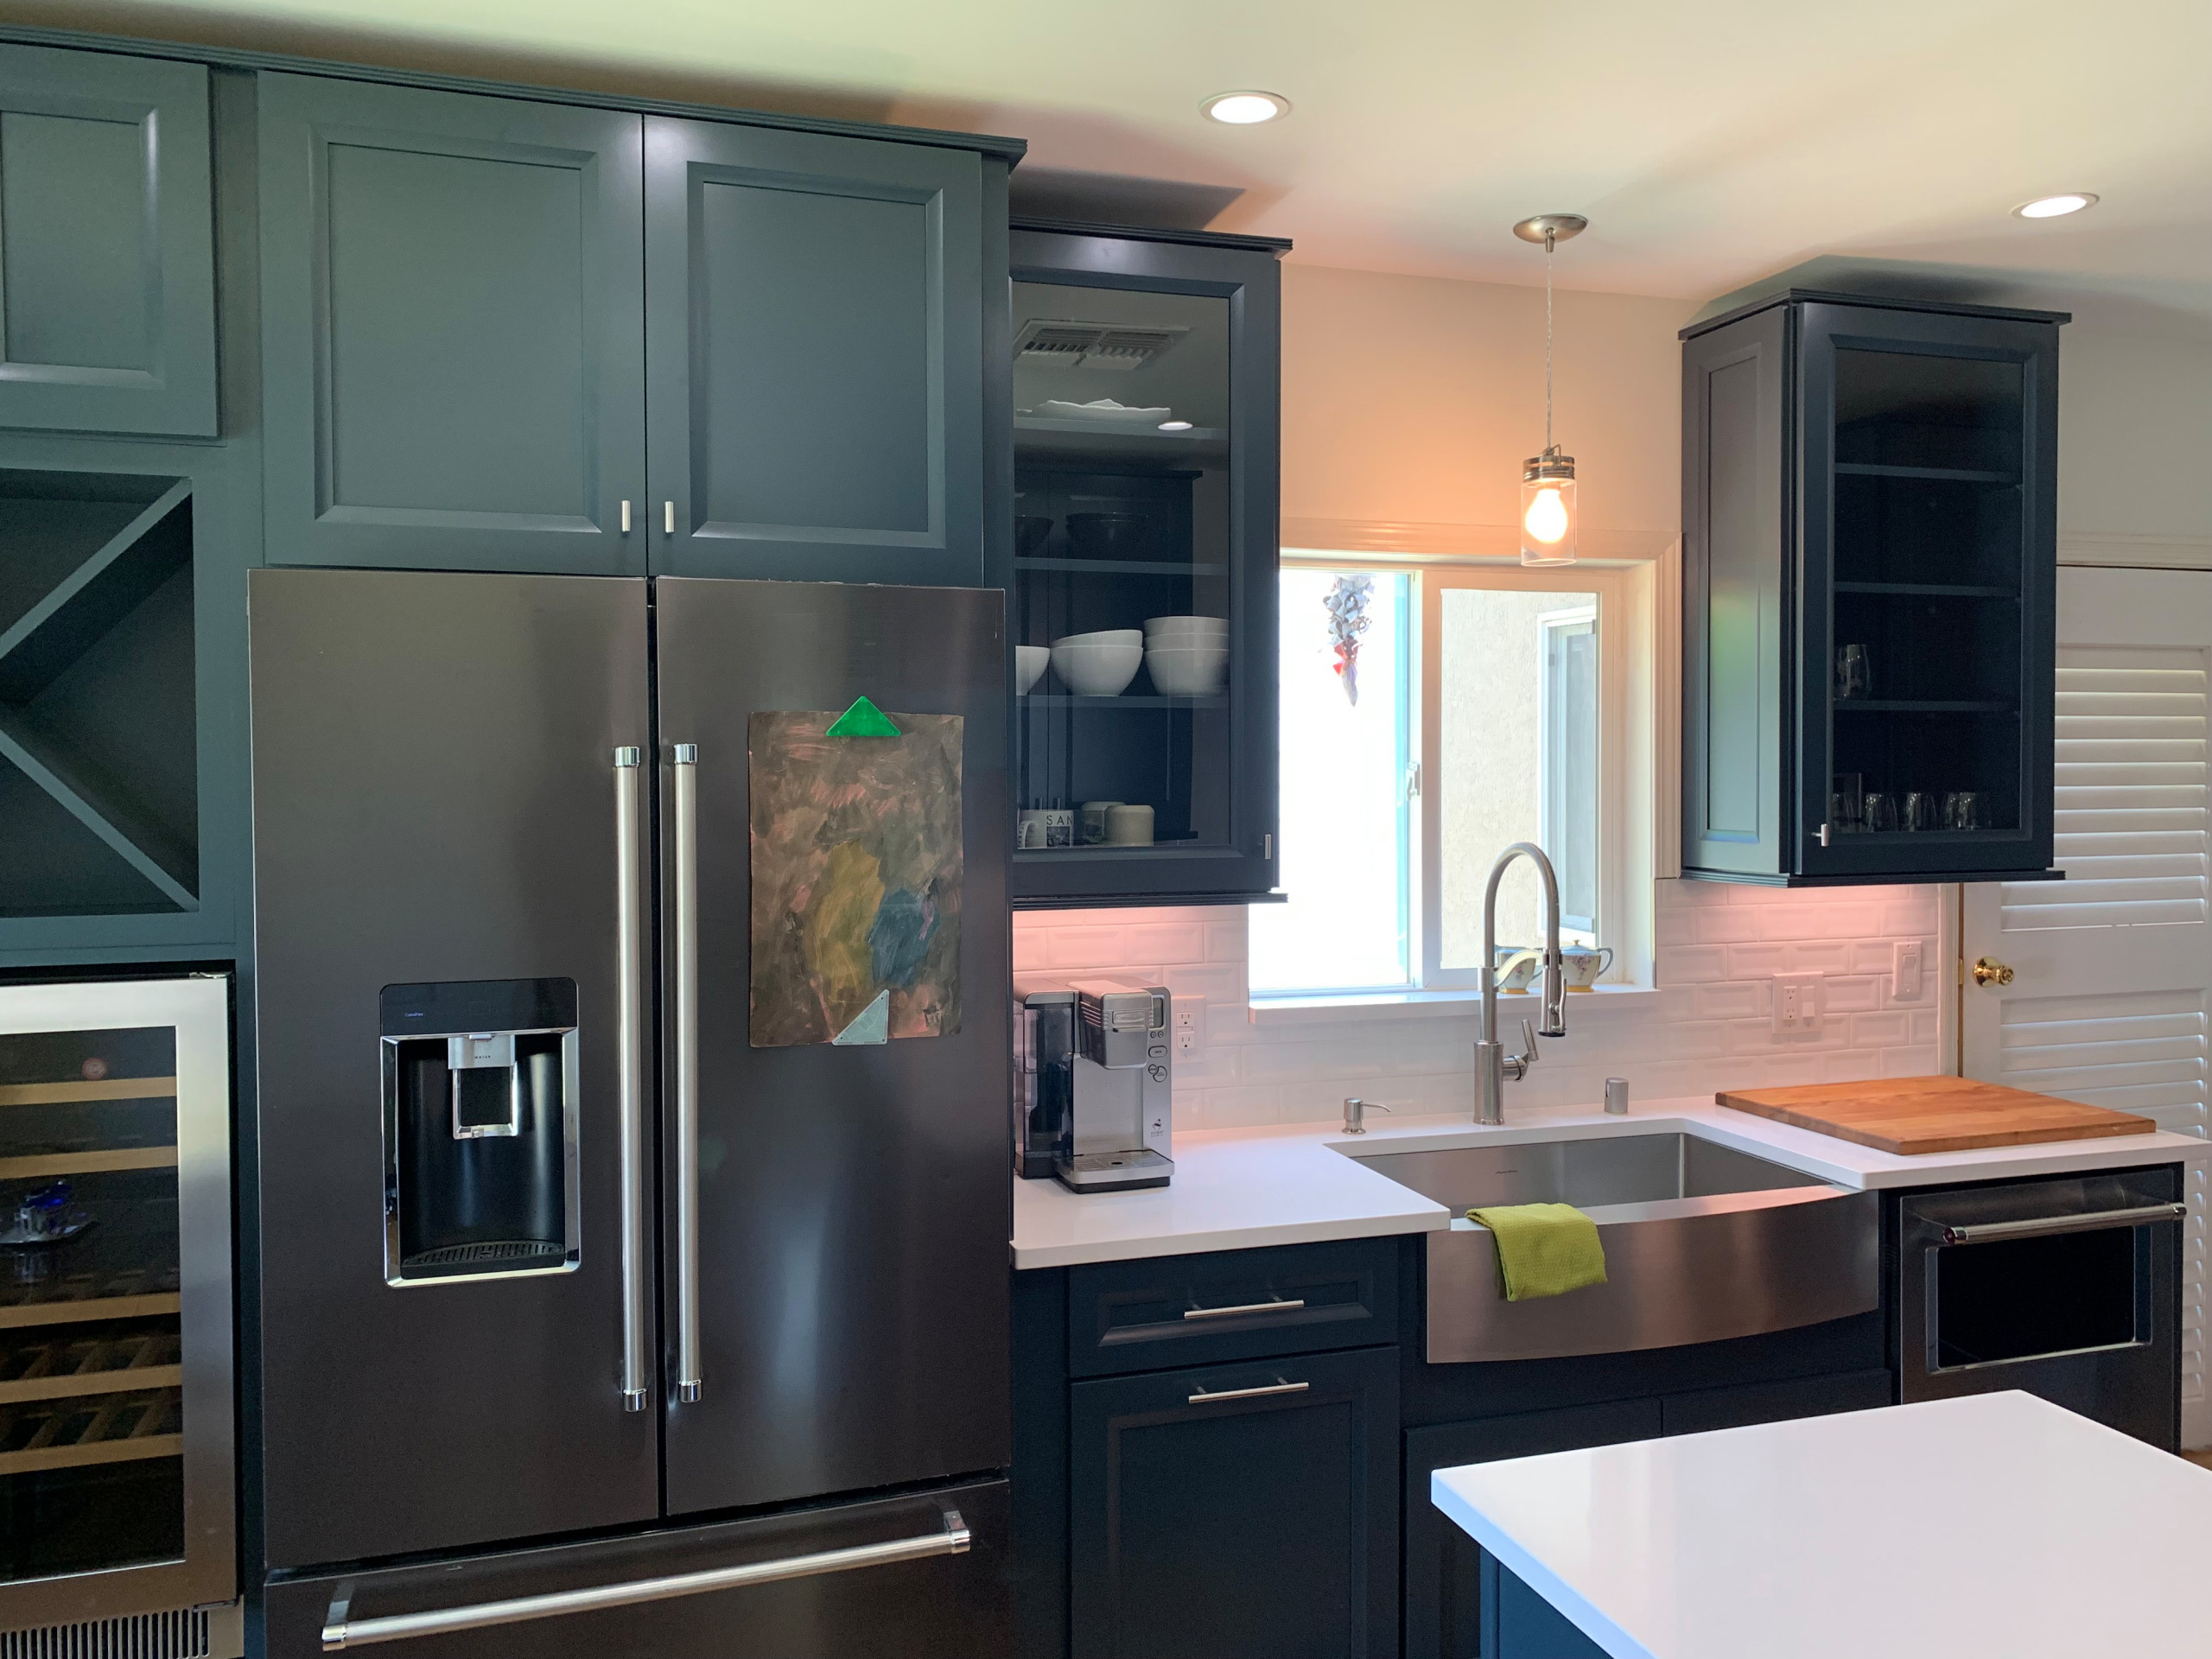 Premium KitchenAid Appliances, Farm Sink & Elevated Wine Frig